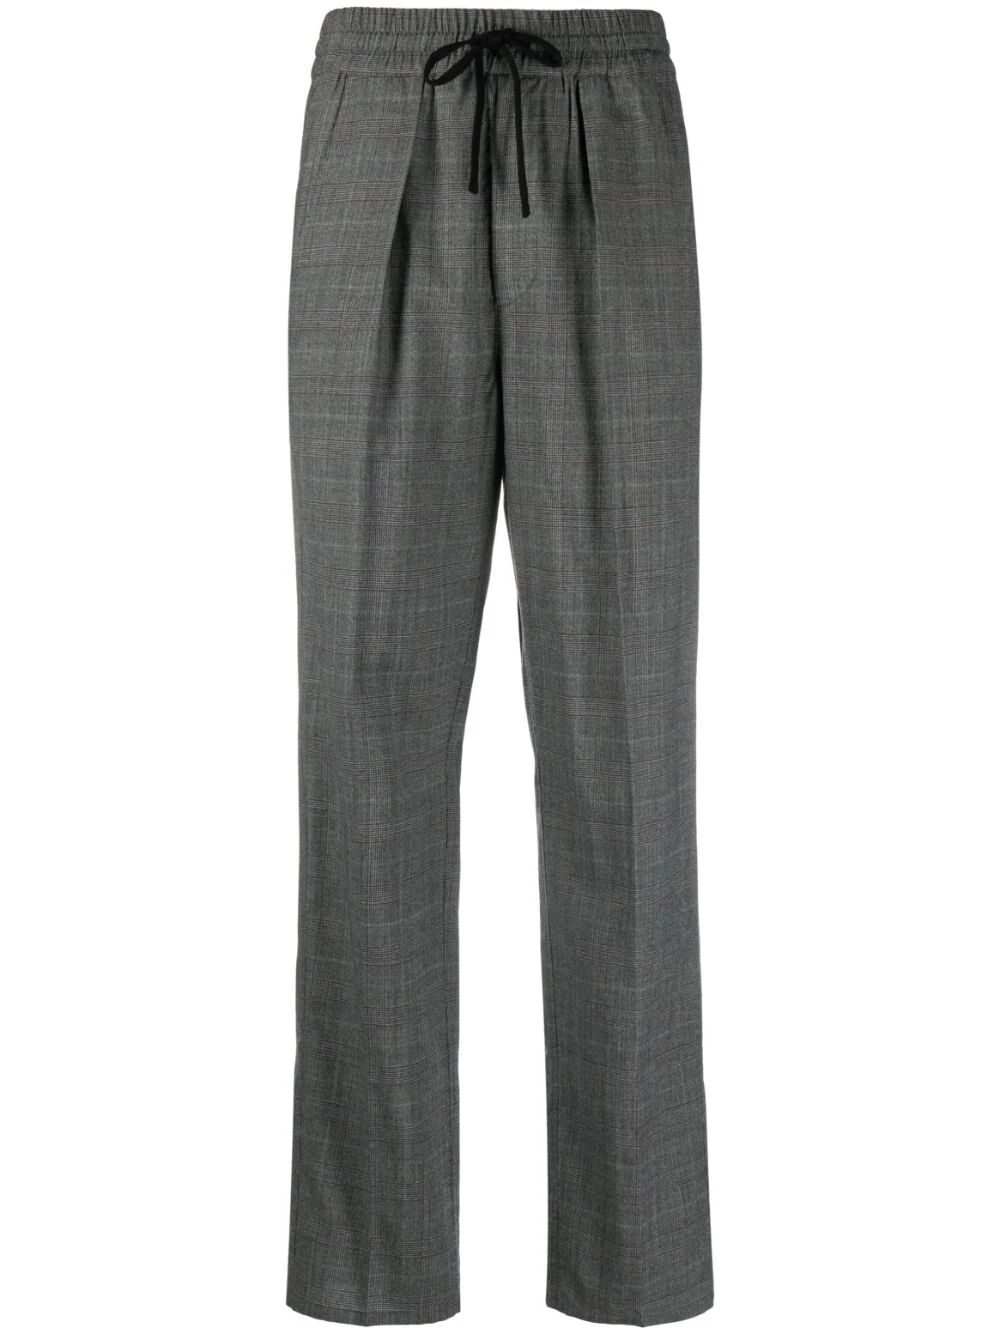 Marant Etoile Viamao High-rise Cotton Pants In Grey